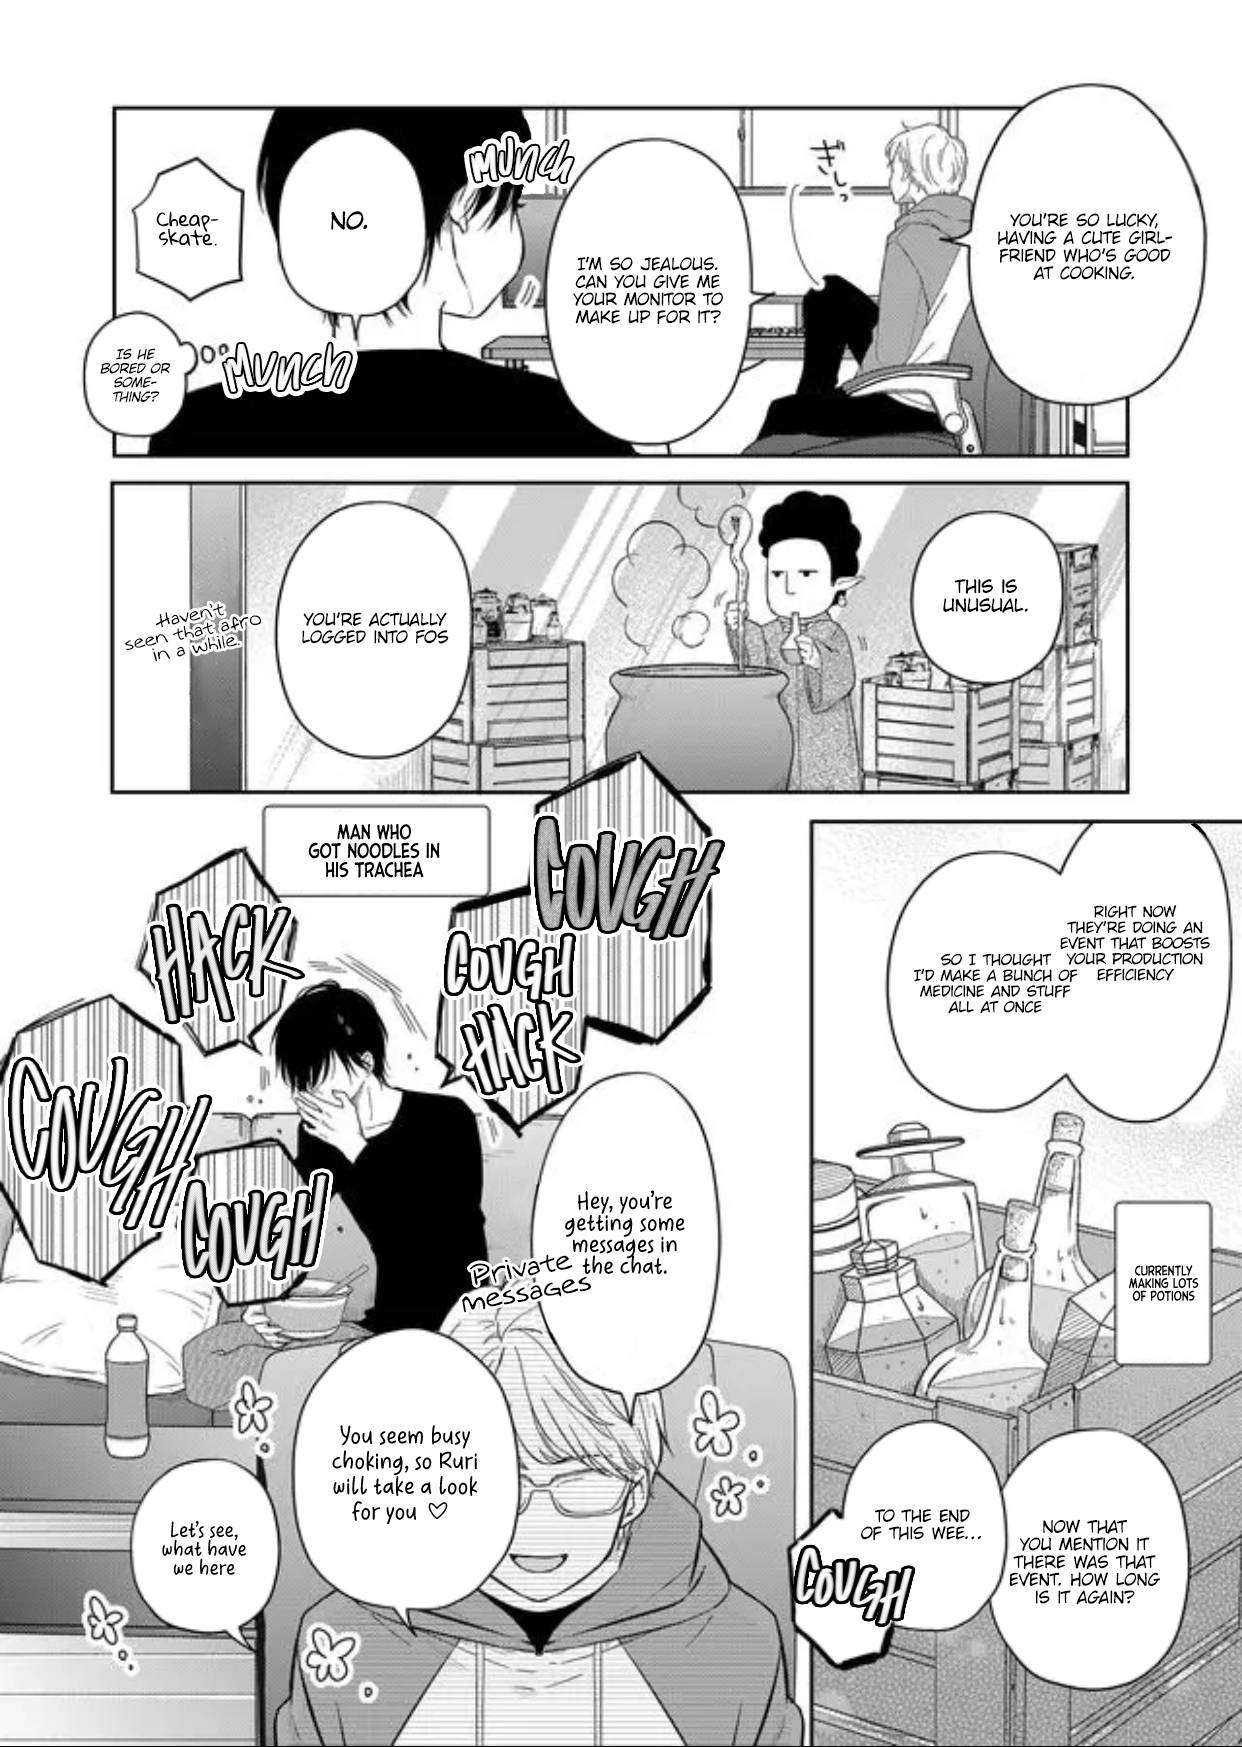 Read My Lv999 Love for Yamada-kun Manga English [New Chapters] Online Free  - MangaClash